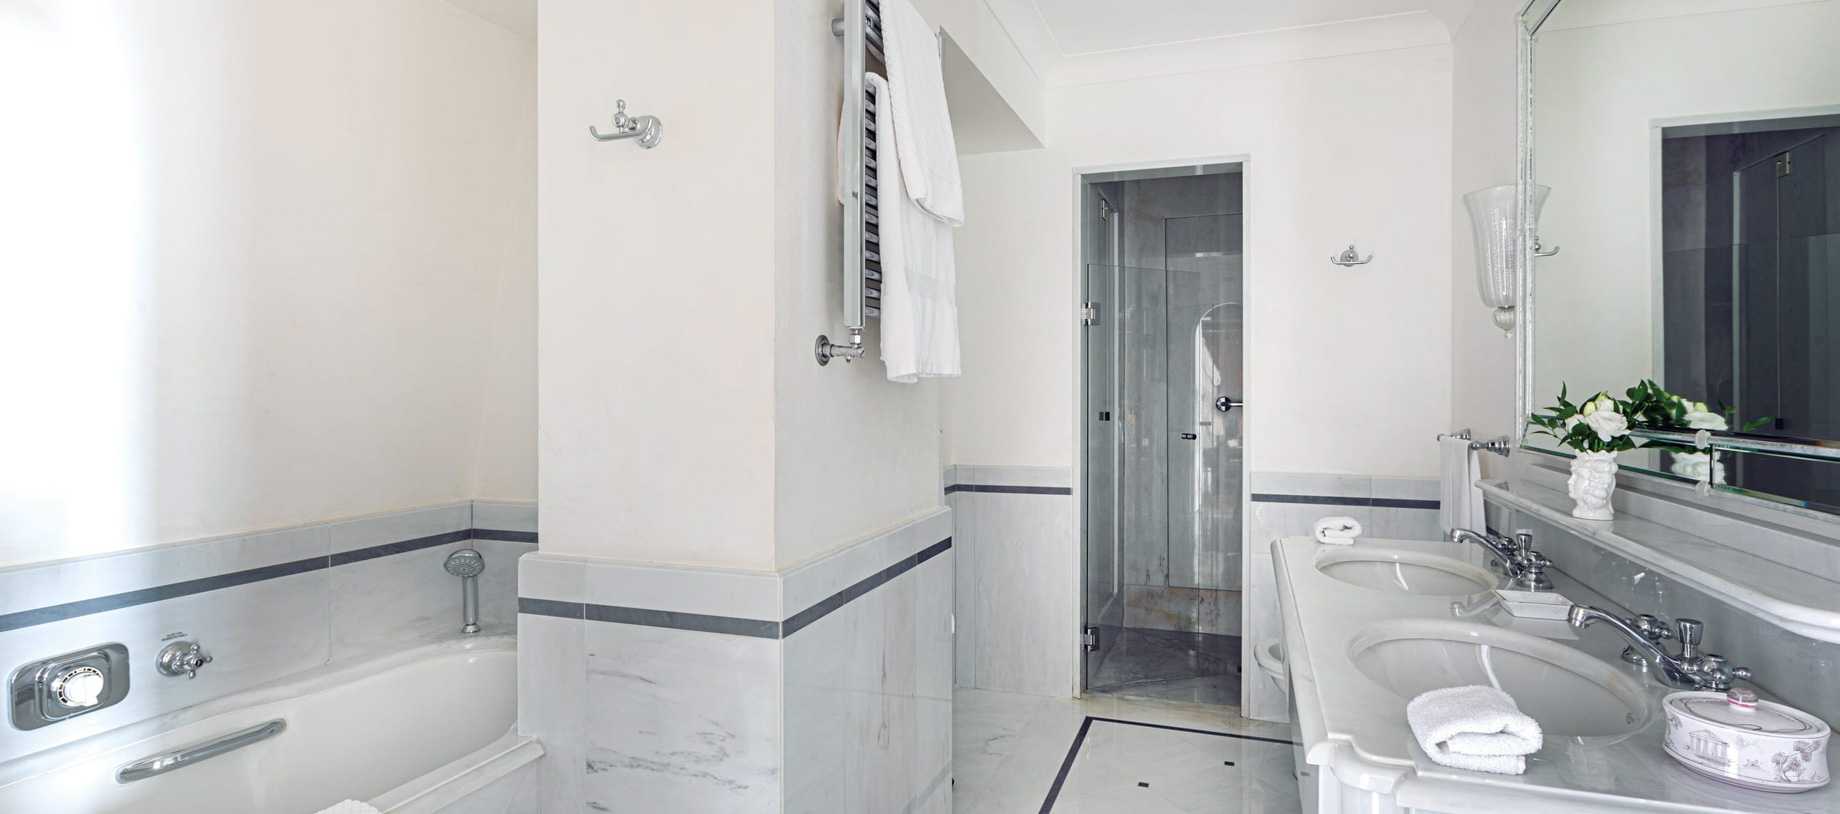 138 – Grand Hotel Timeo, A Belmond Hotel – Taormina, Italy – Bathroom